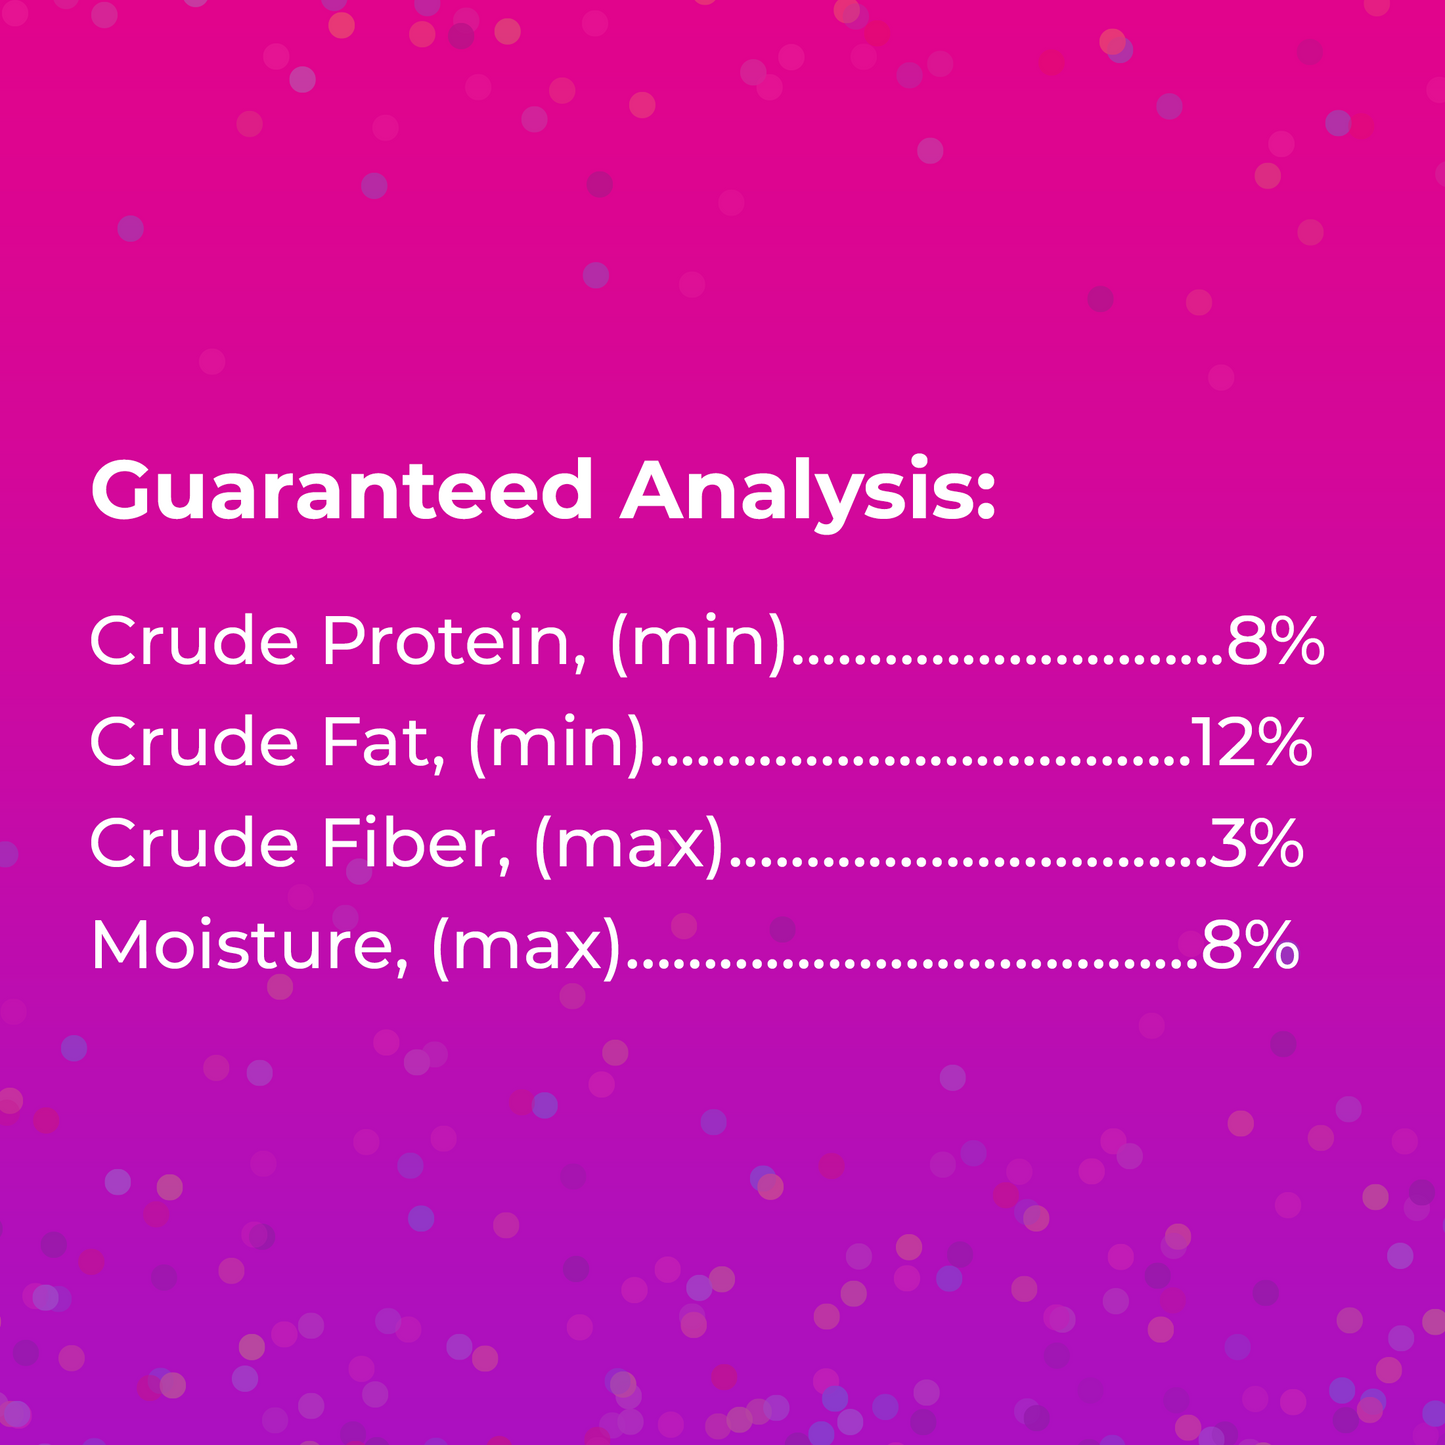 Guaranteed analysis listed: crude protein (min.) 8%, crude fat (min.) 12%, crude fiber (max.) 3%, moisture (max.) 8%